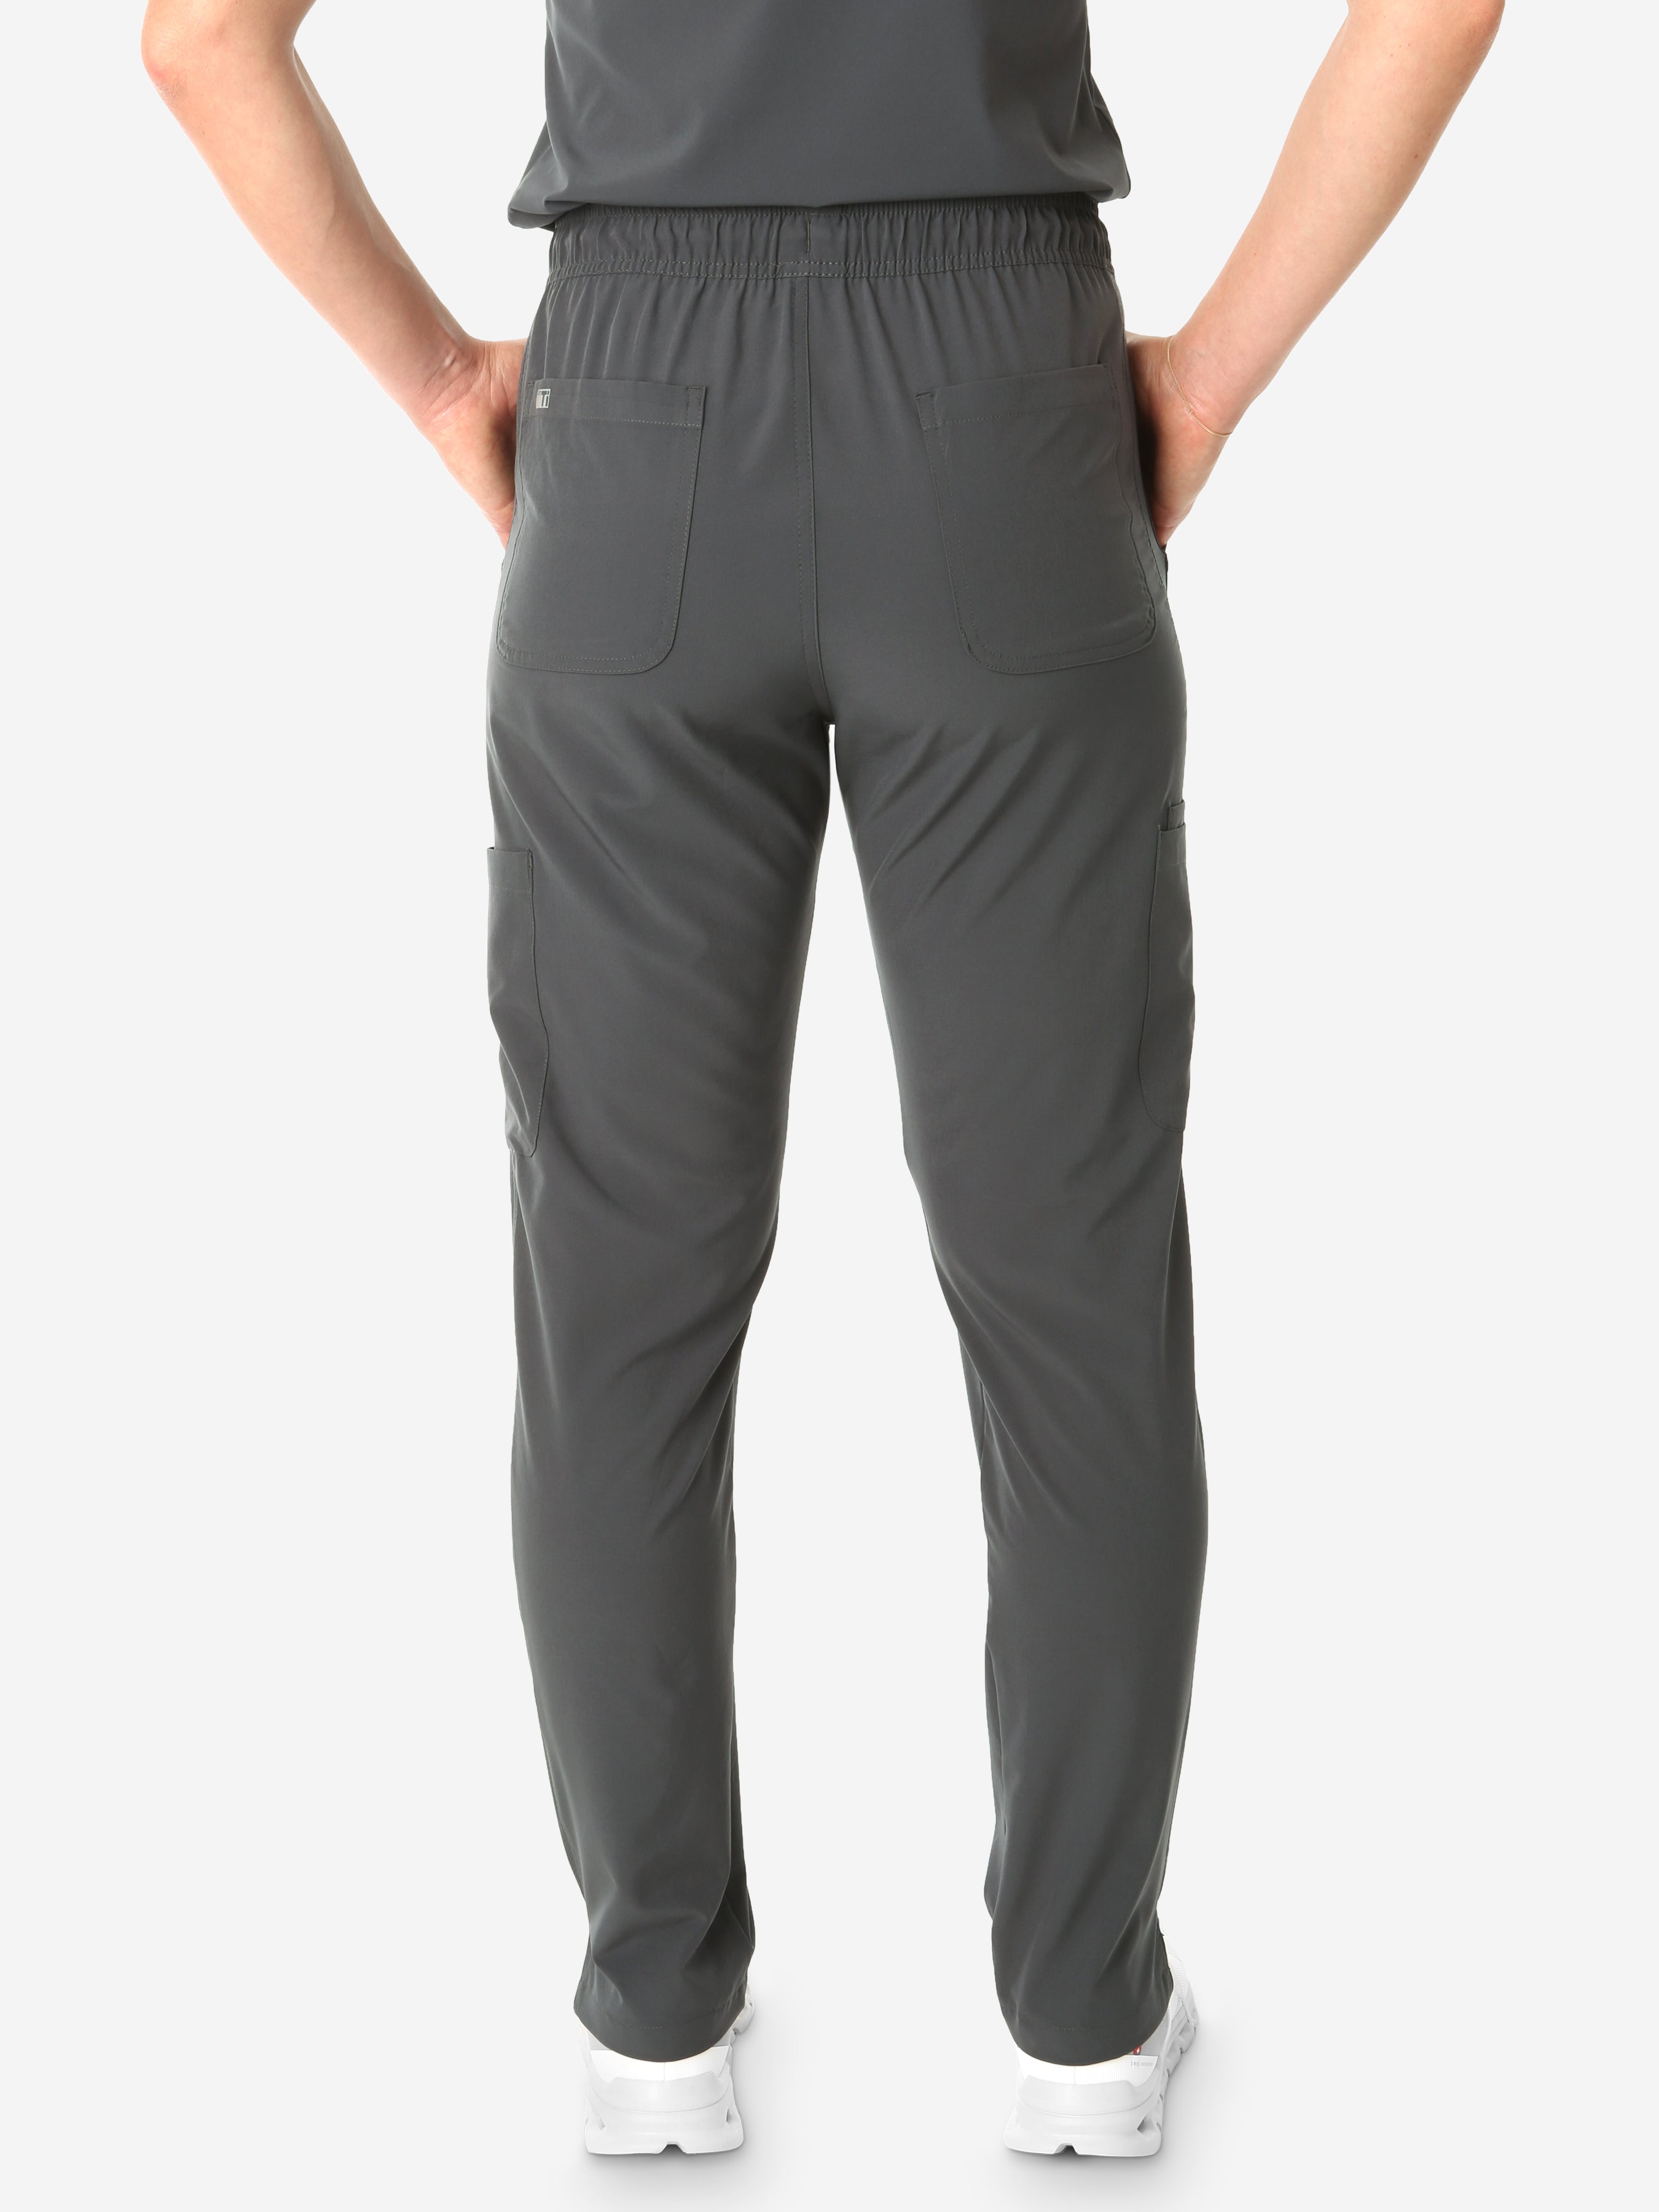 TiScrubs Charcoal Gray Women&#39;s Stretch 9-Pocket Pants Back View Pants Only